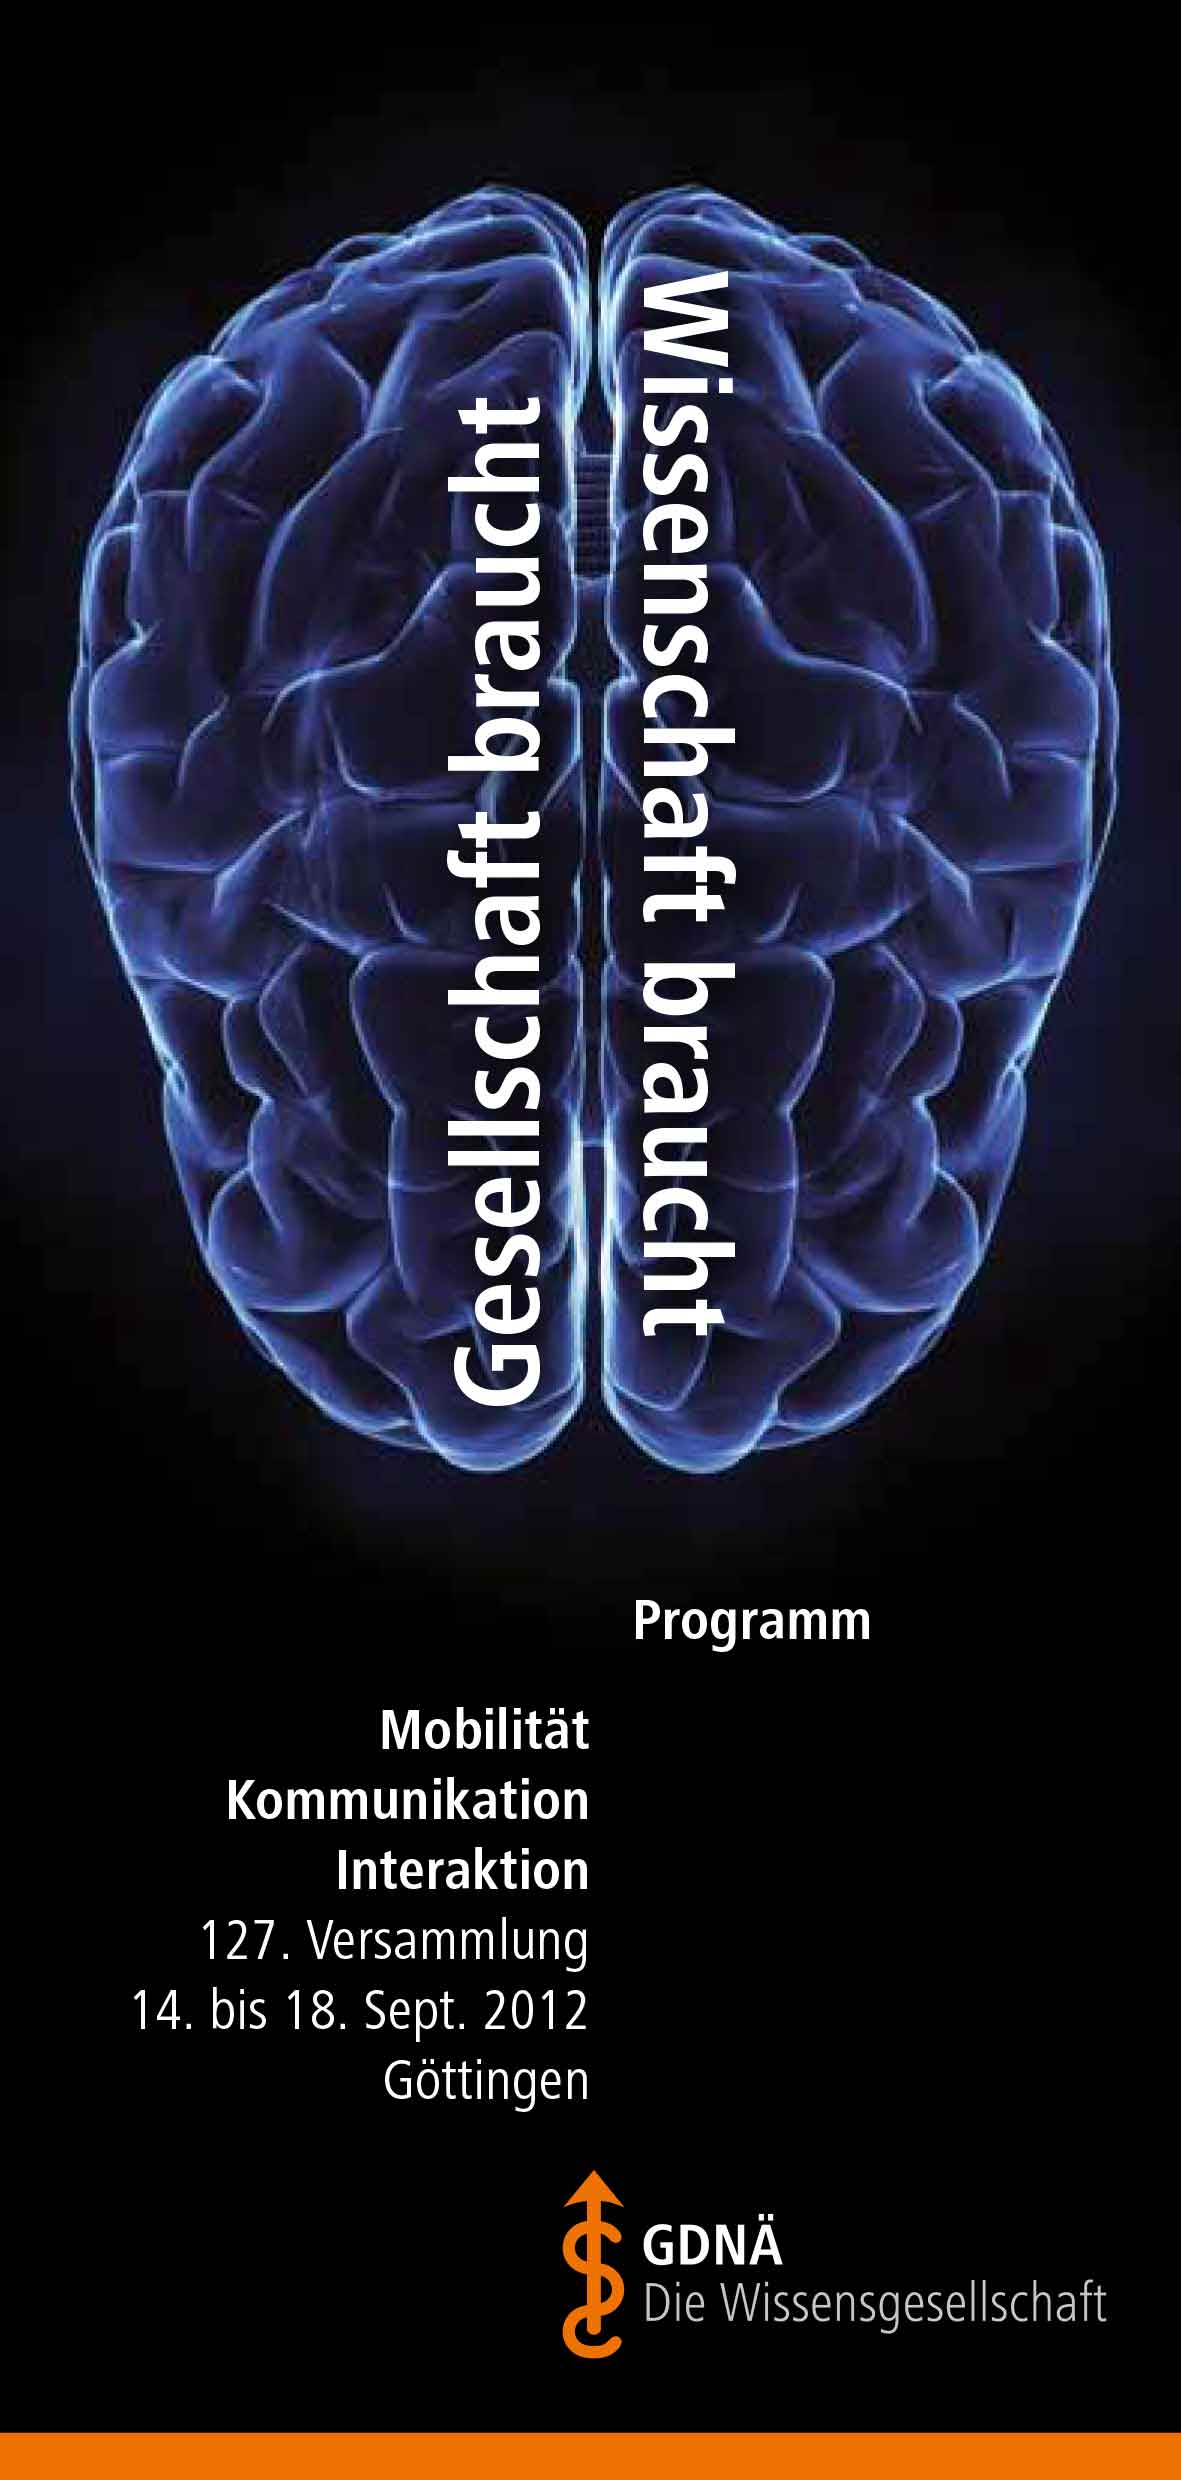 GDNA Programm 2012 Göttingen 1